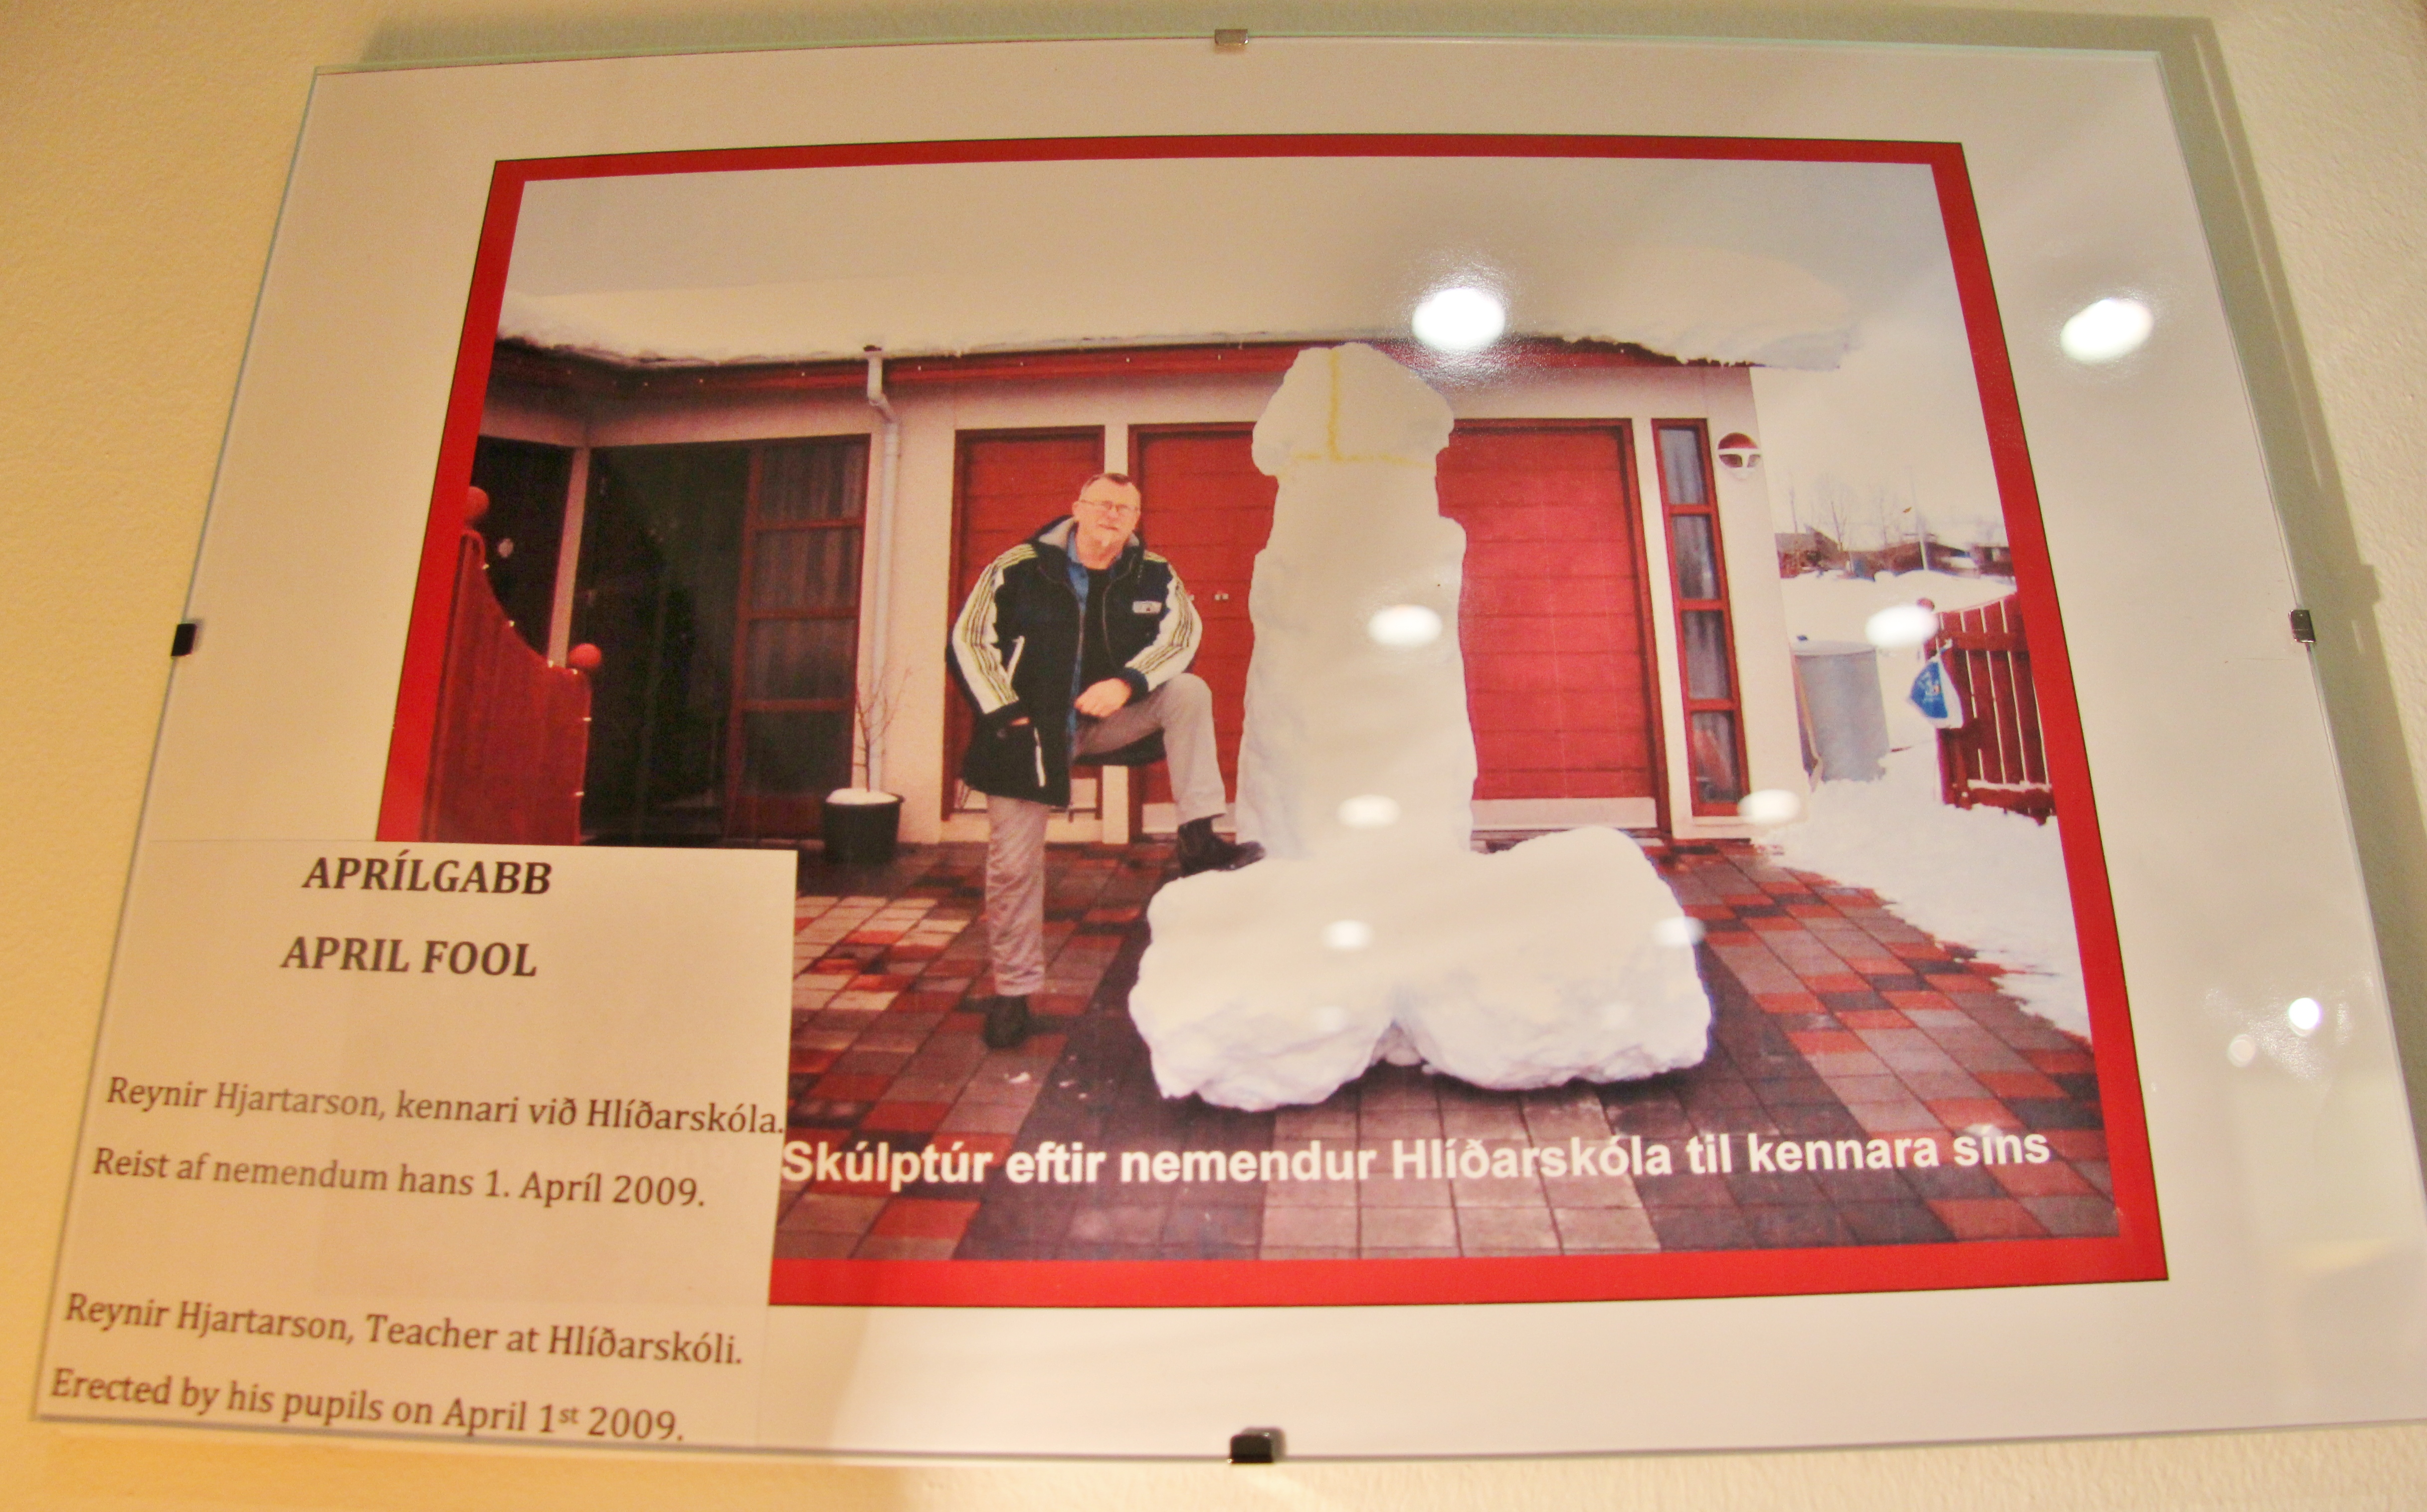 Penis snowman, museum Iceland